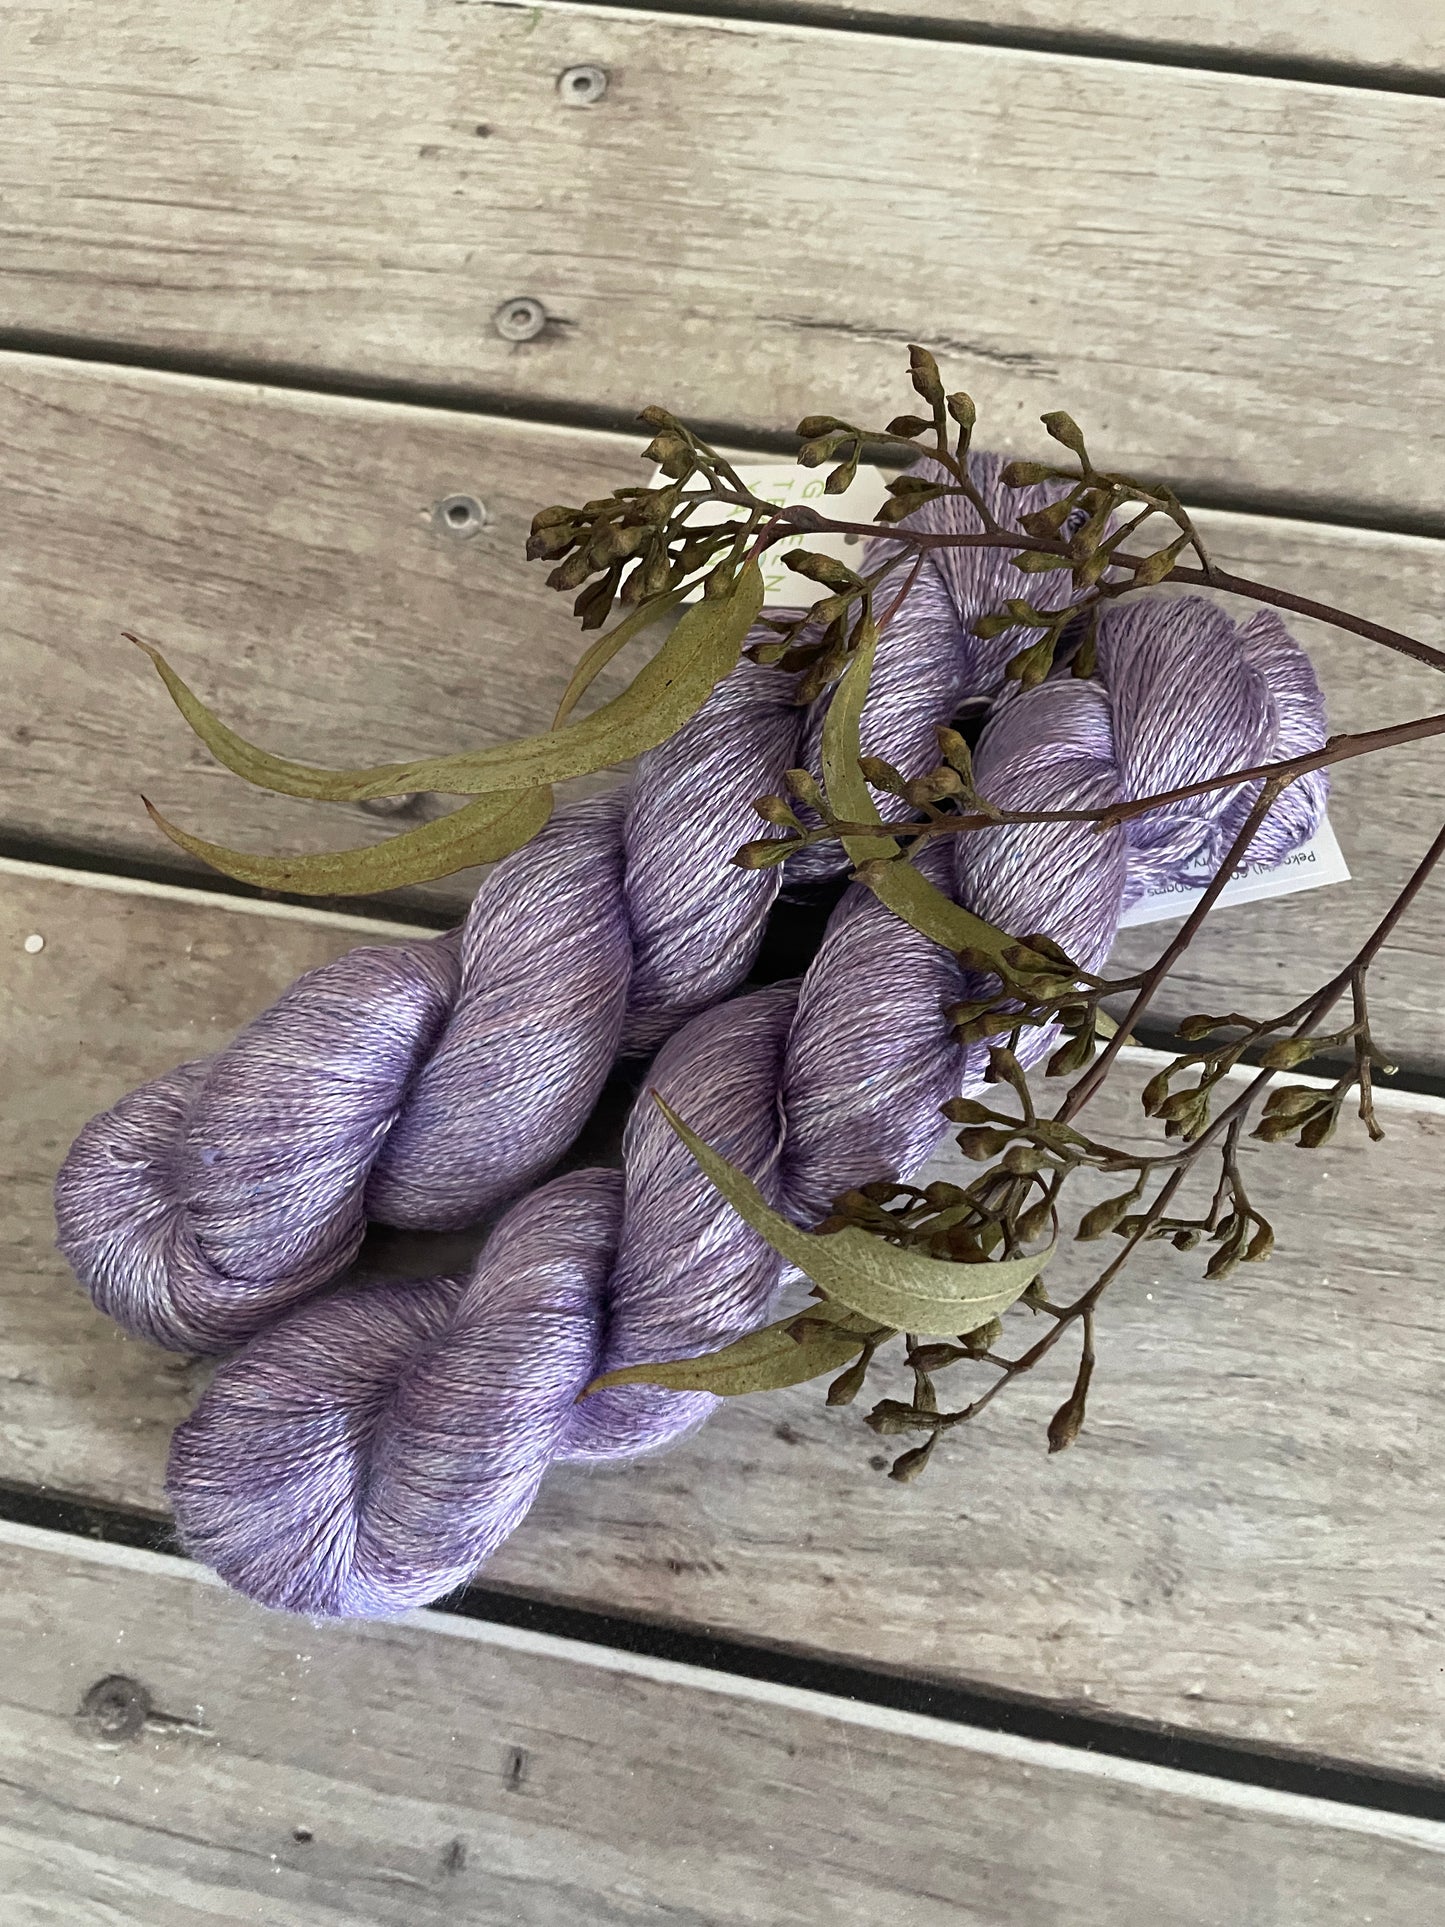 Lilac - 3 ply in Mulberry silk yarn - Pekoe hl